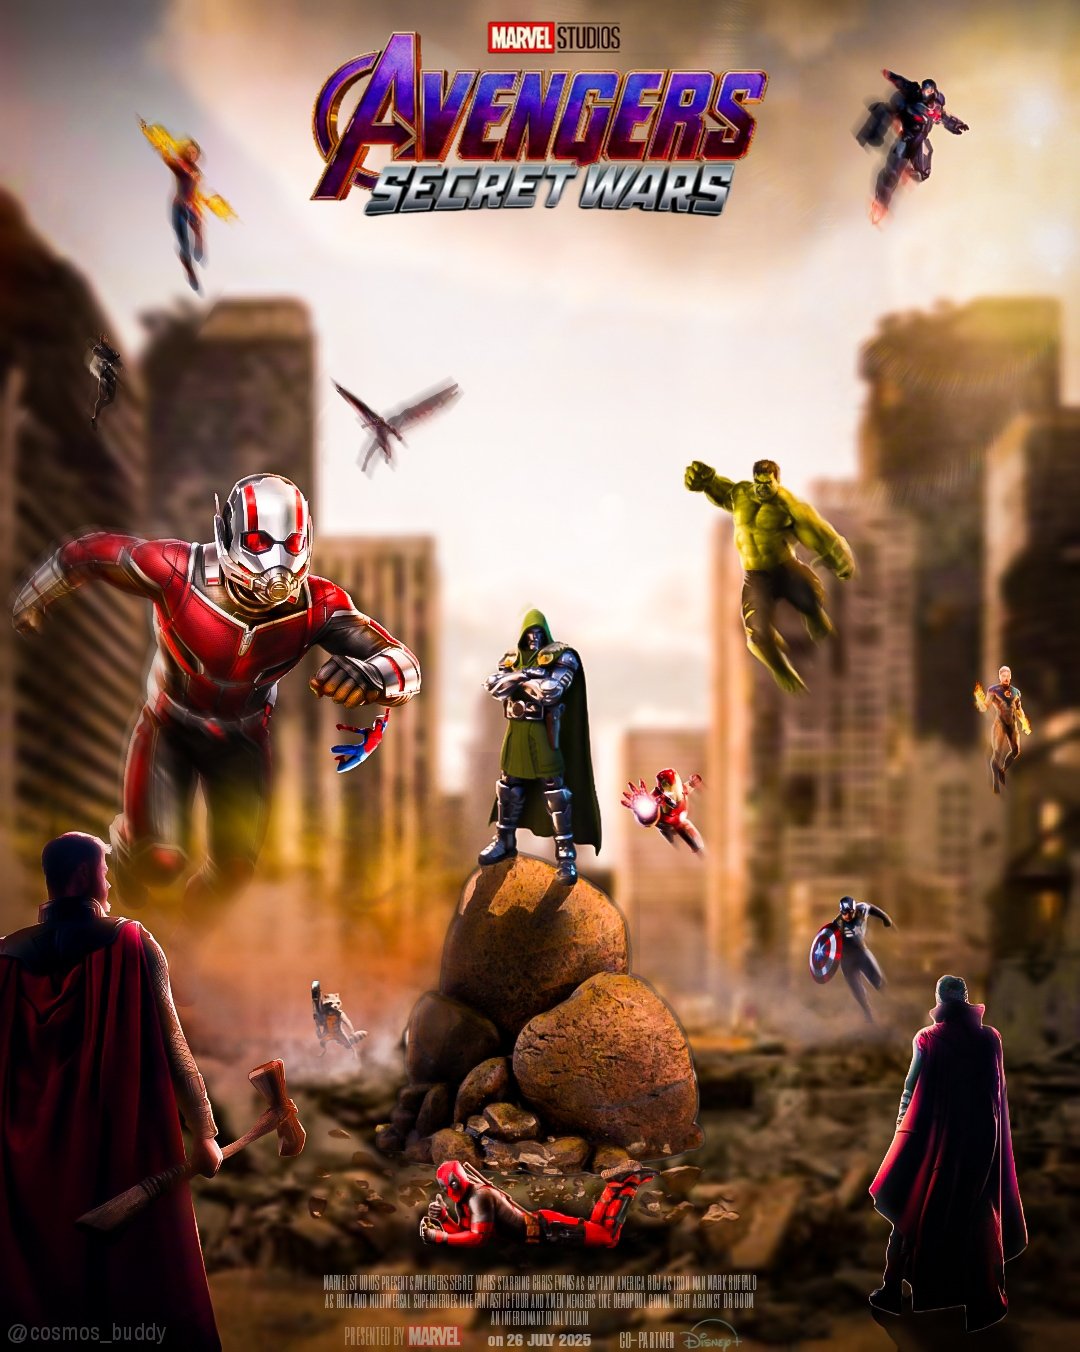 cosmos_buddy a long break AVENGERS SECRET WARS concept poster made by me using and #marvelstudios #kevinfeige #avengers #secretwars #captainamerica #chrisevans #ironmanedit #tonystark #rdj #spiderman